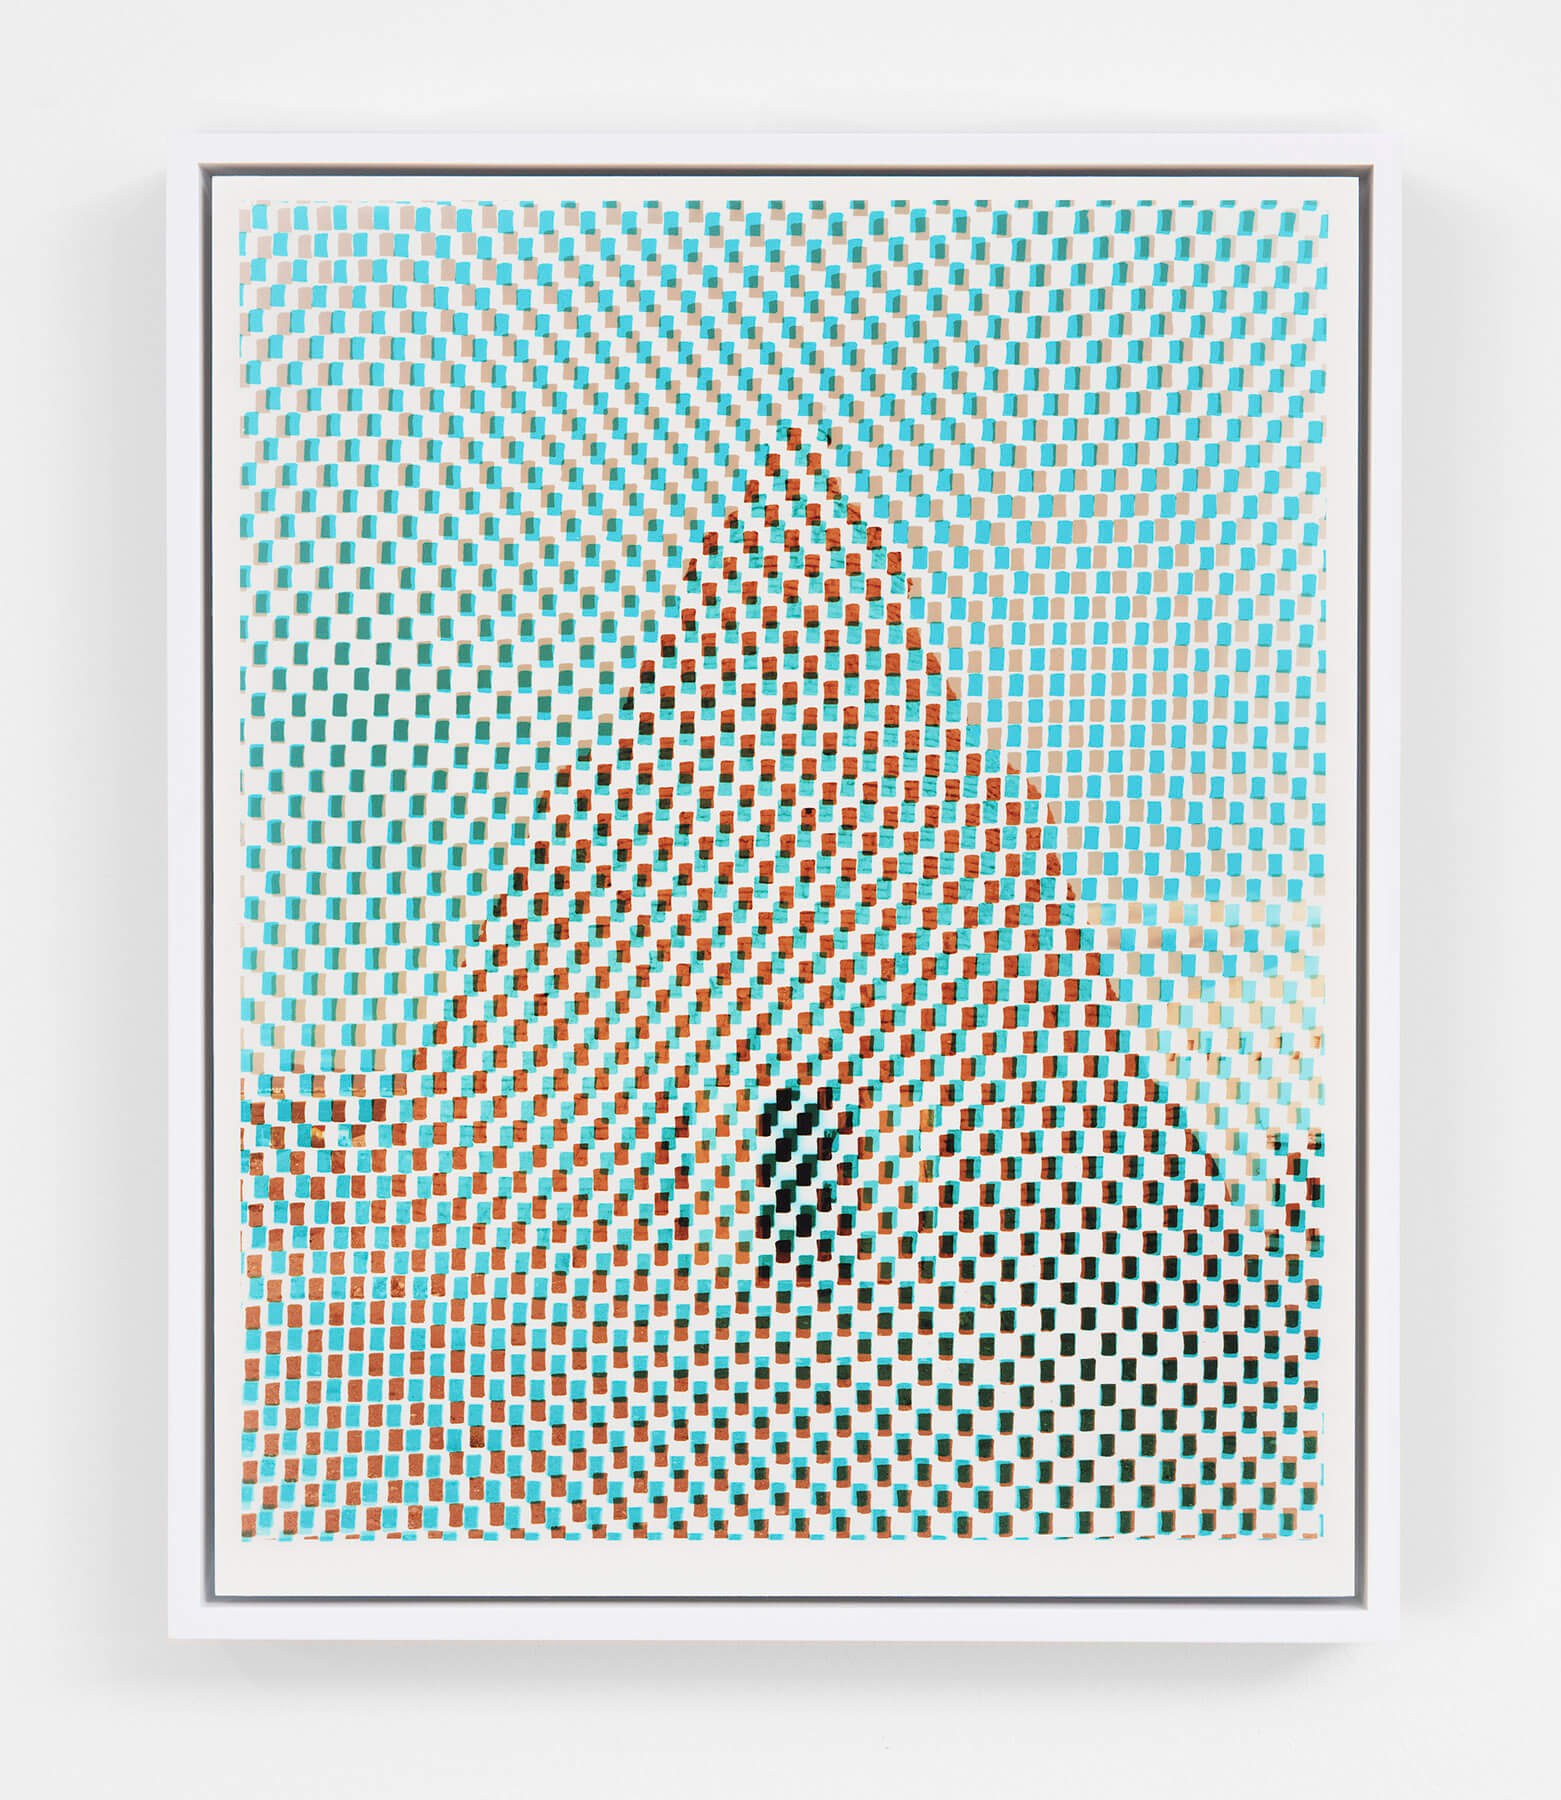 Livia Corona Benjamin
                                        'Infinite Rewrite XVII', 2015
                                        10 1/2 x 8 1/2 Inches
                                        unique analog C-print
                                        